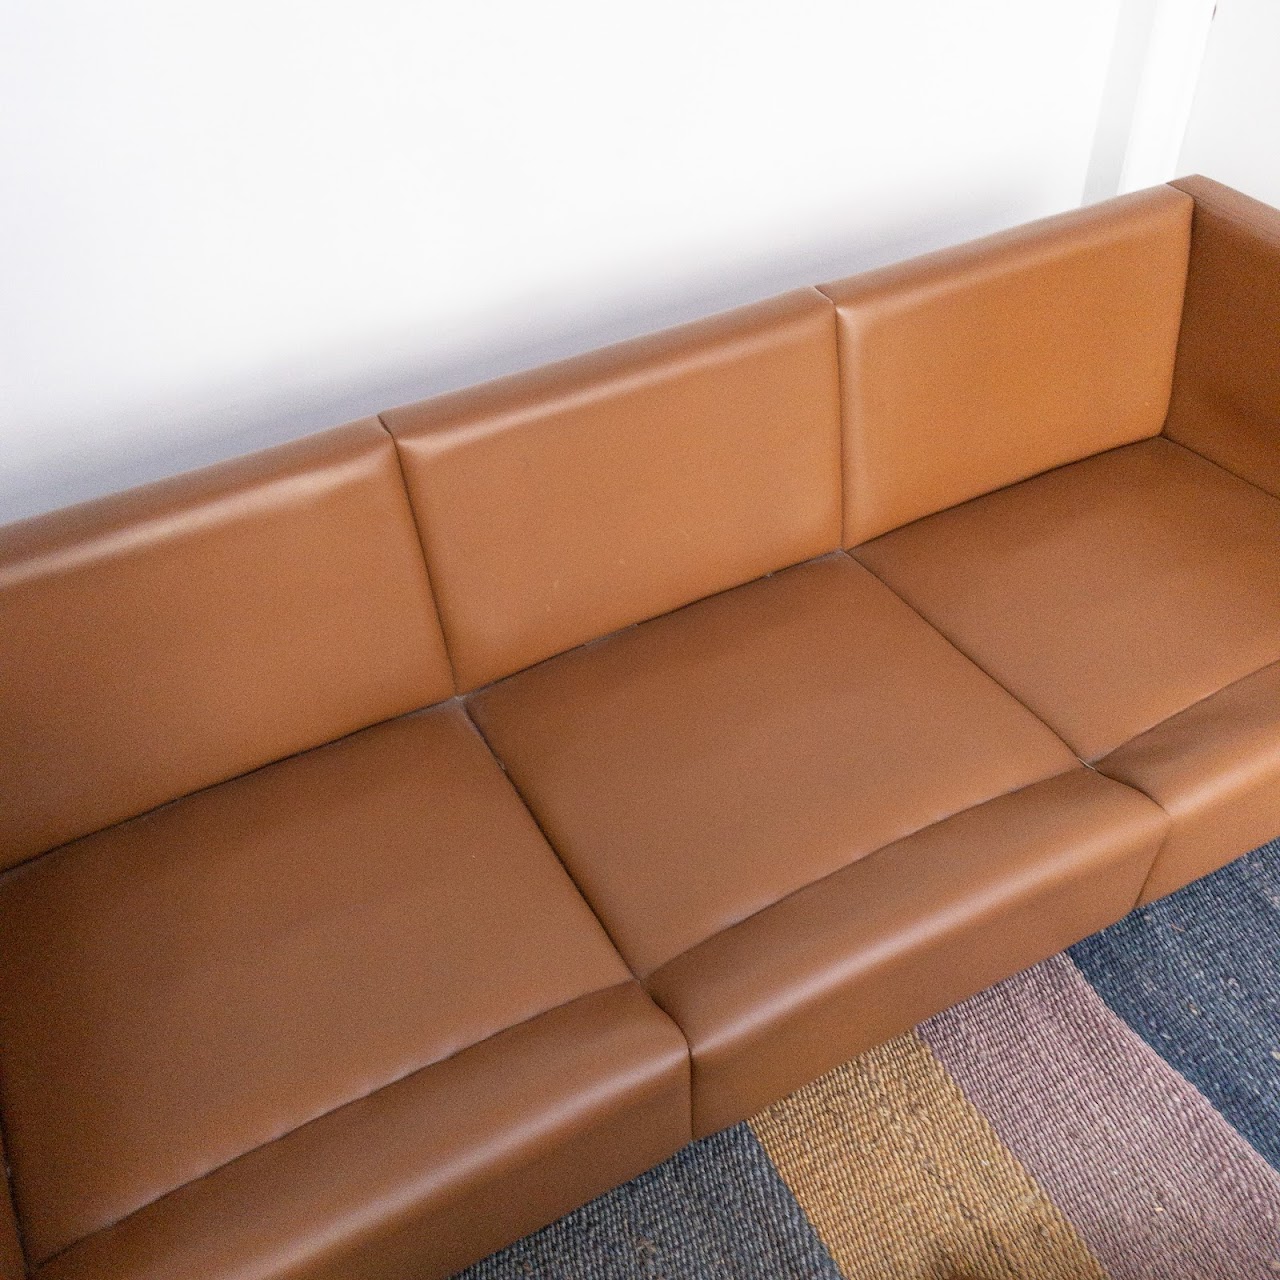 Knoll Pfister Leather Sofa